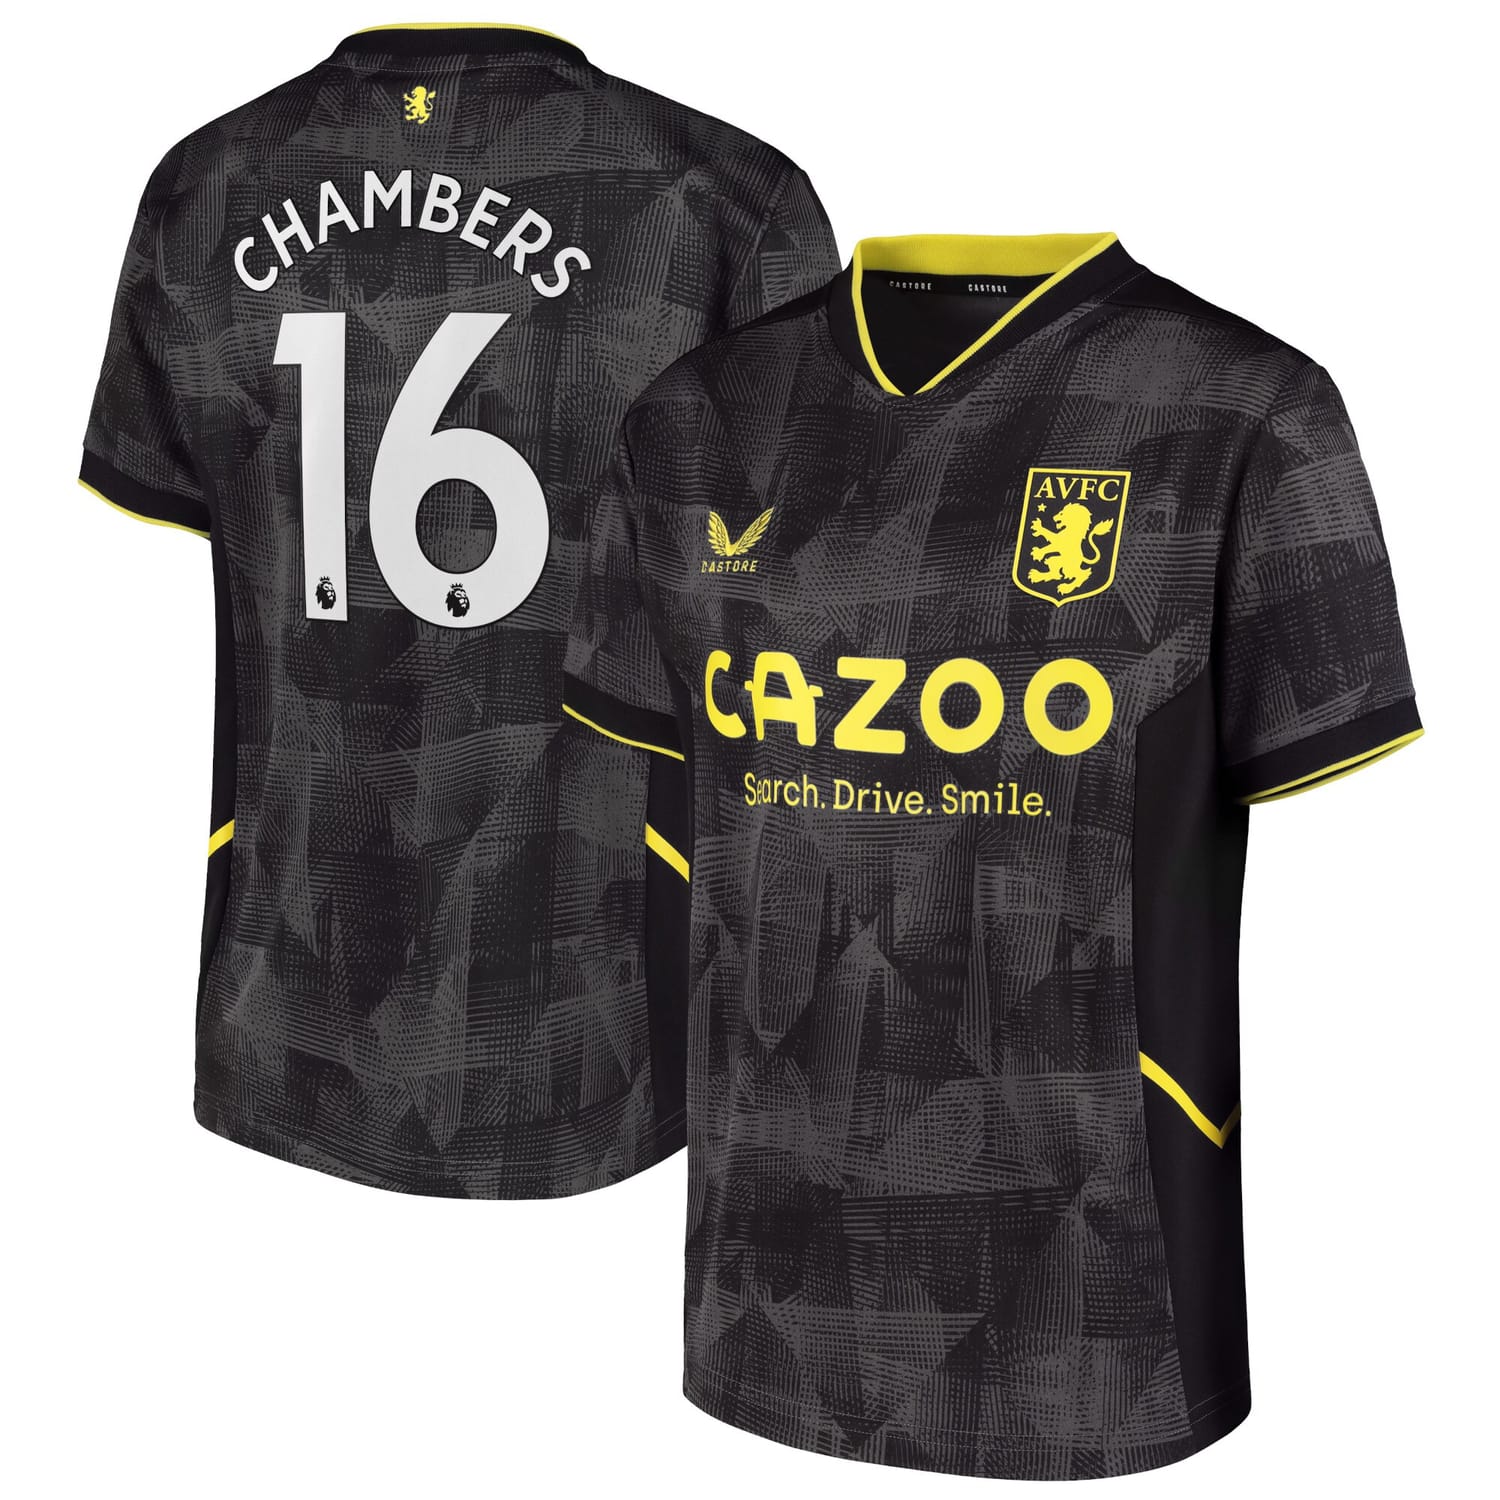 Premier League Aston Villa Third Jersey Shirt 2022-23 player Calum Chambers 16 printing for Men